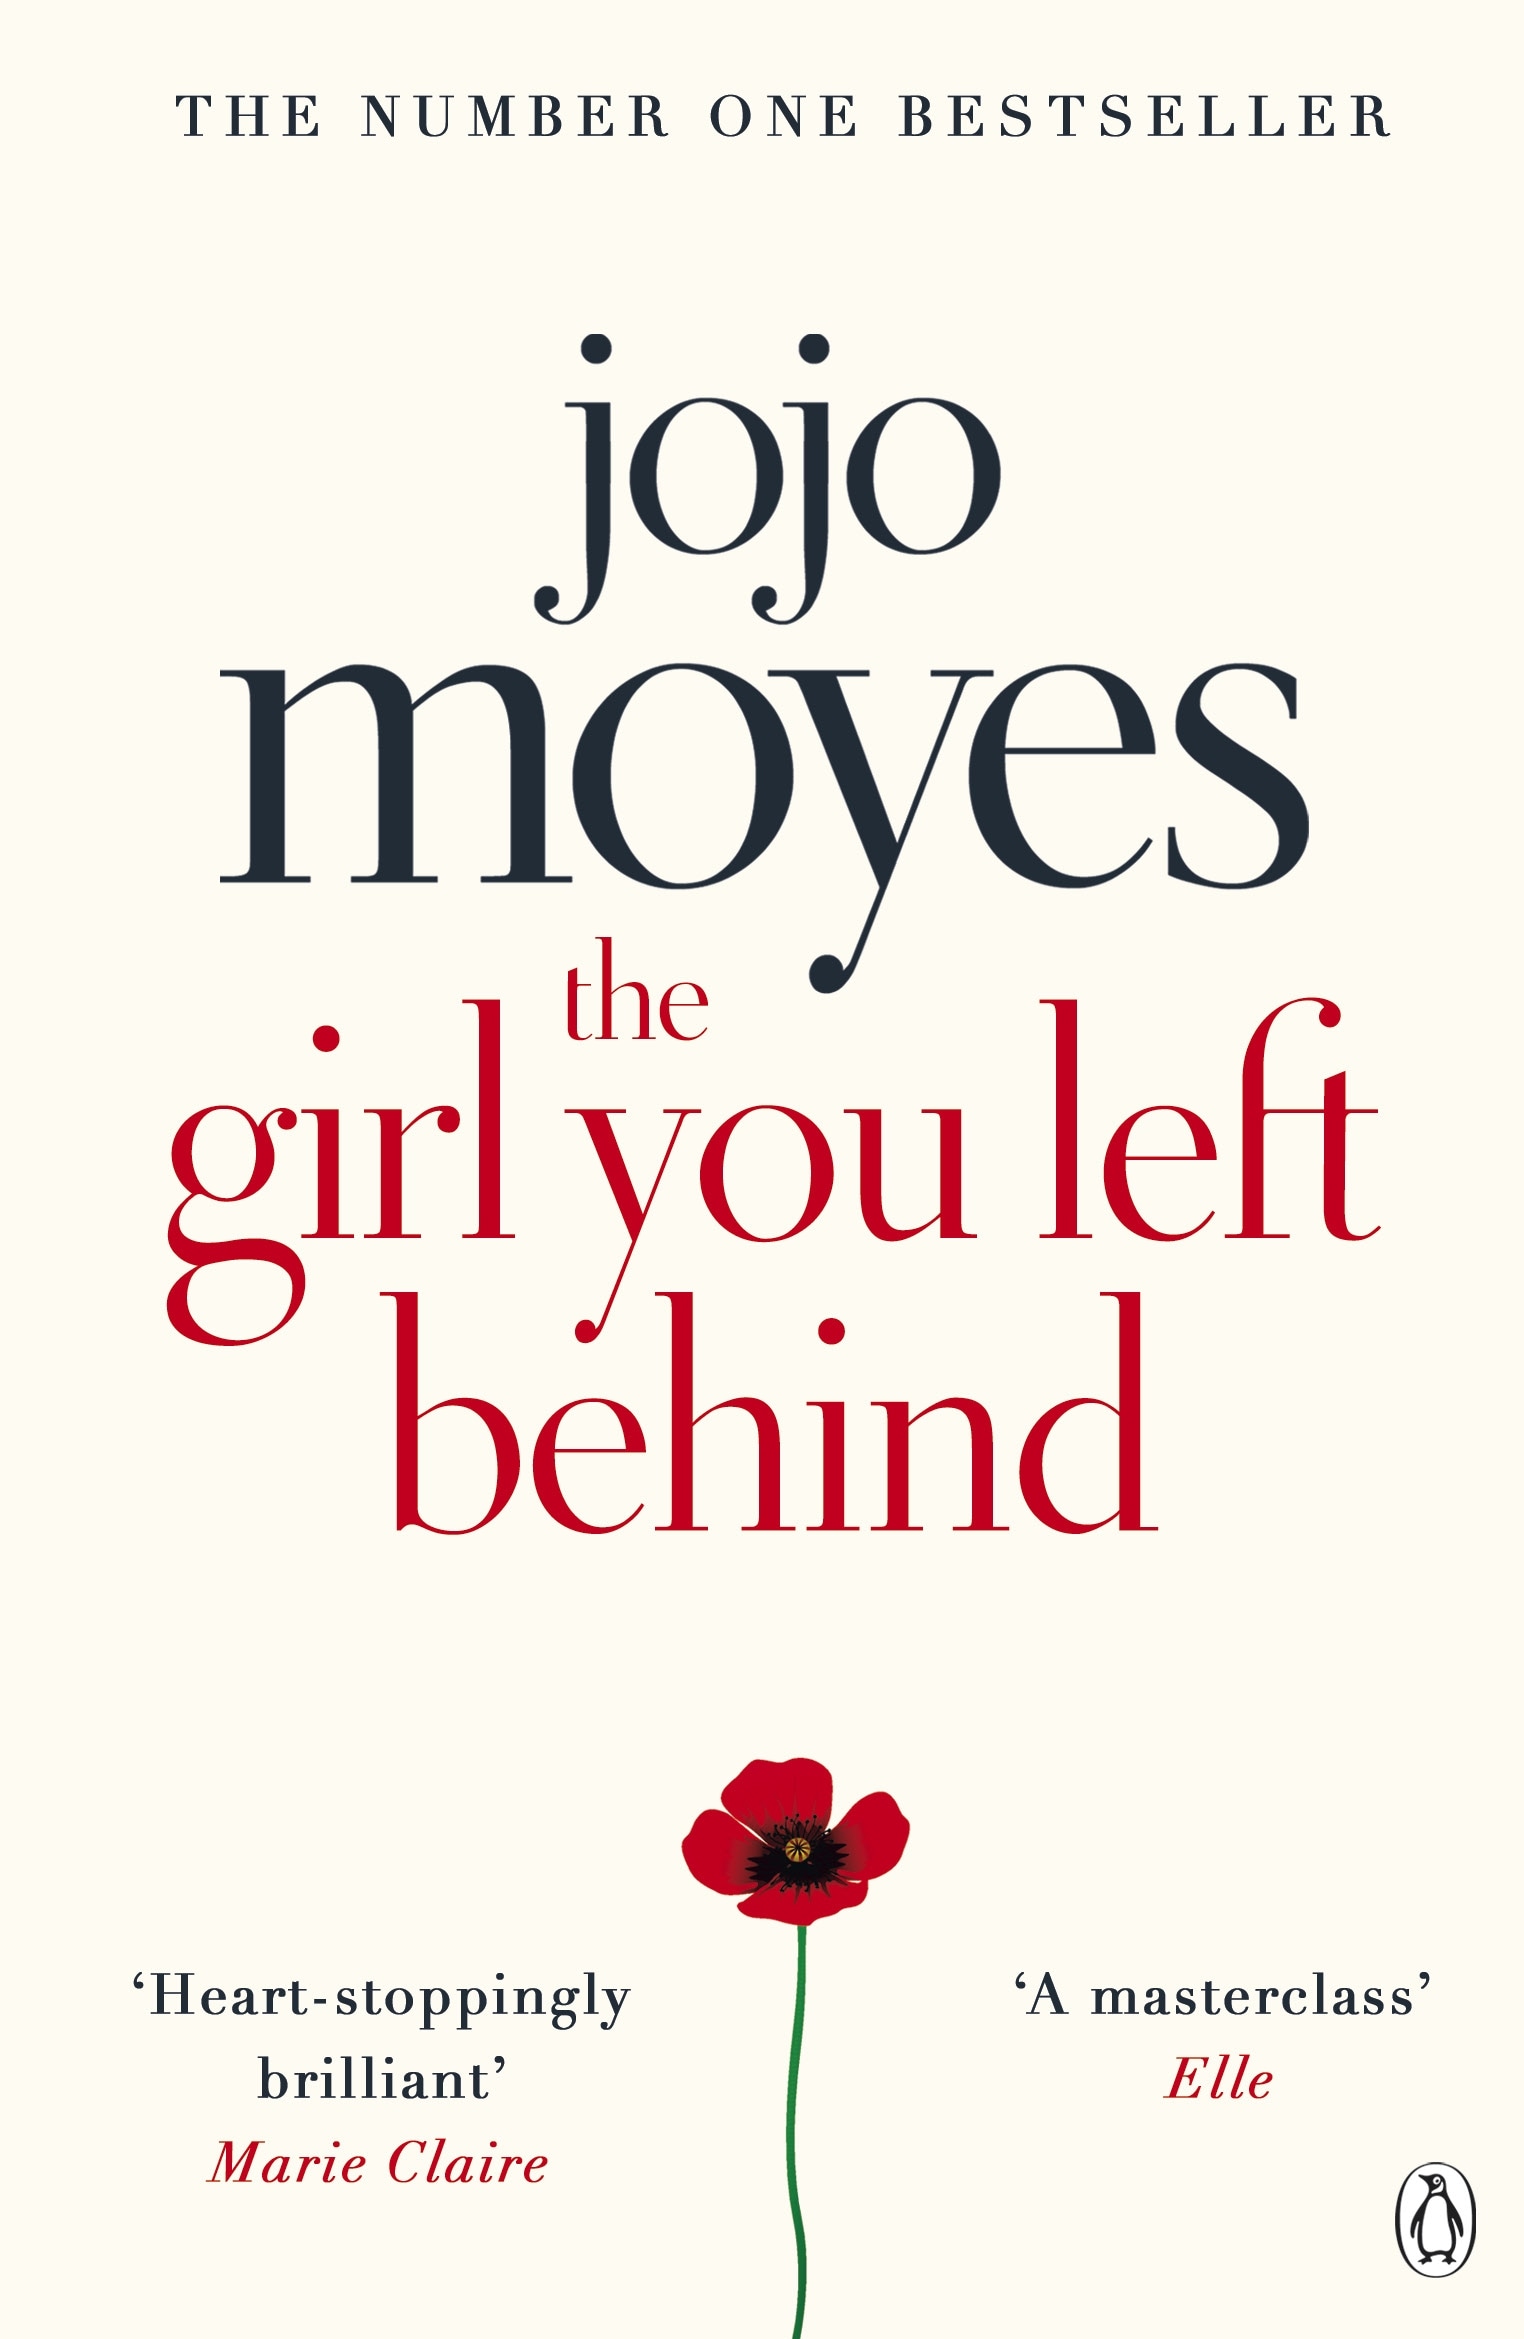 Book “The Girl You Left Behind” by Jojo Moyes — September 27, 2012